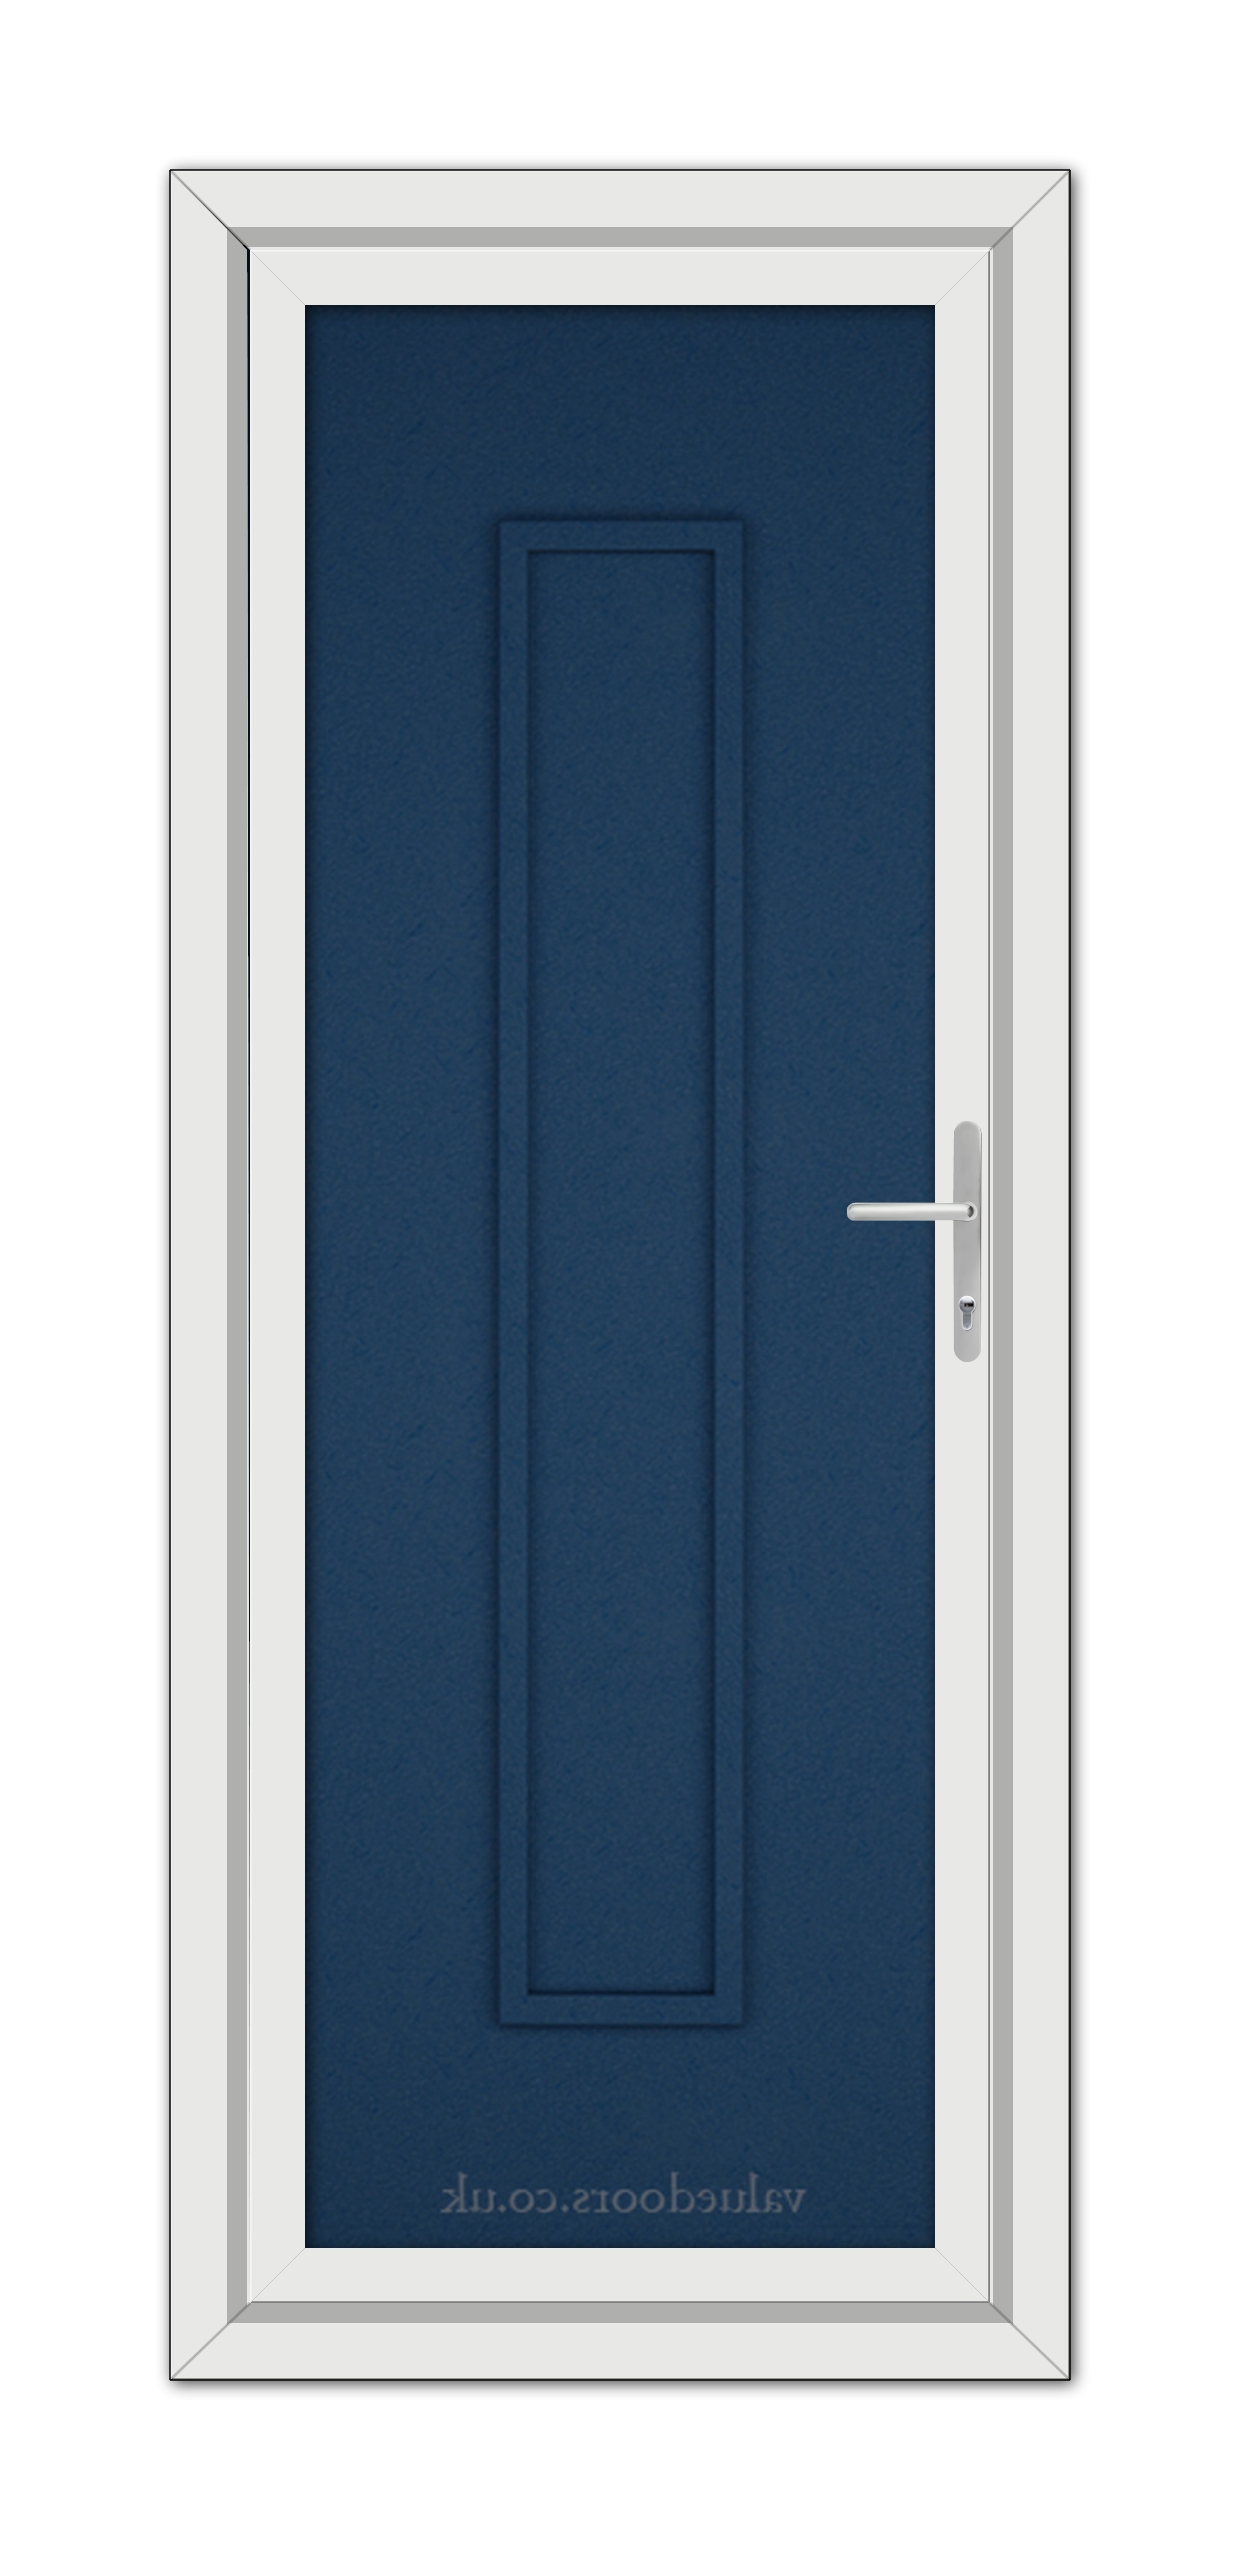 Blue Modern 5101 Solid uPVC Door with white trim.